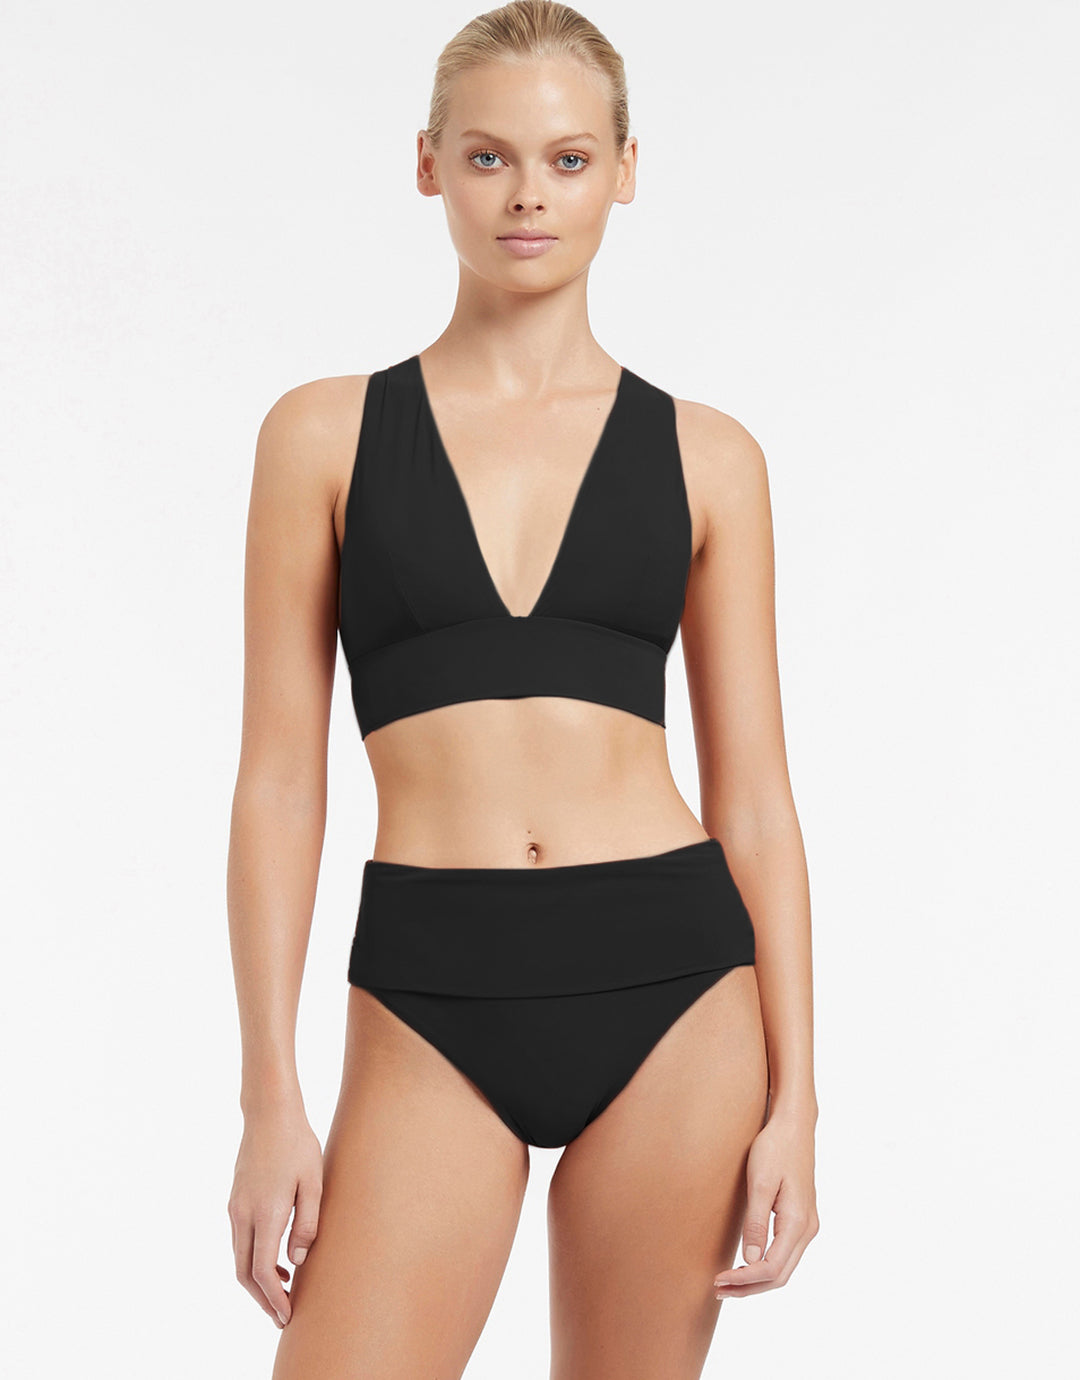 Jetset Fold Down Bikini Pant - Black - Simply Beach UK